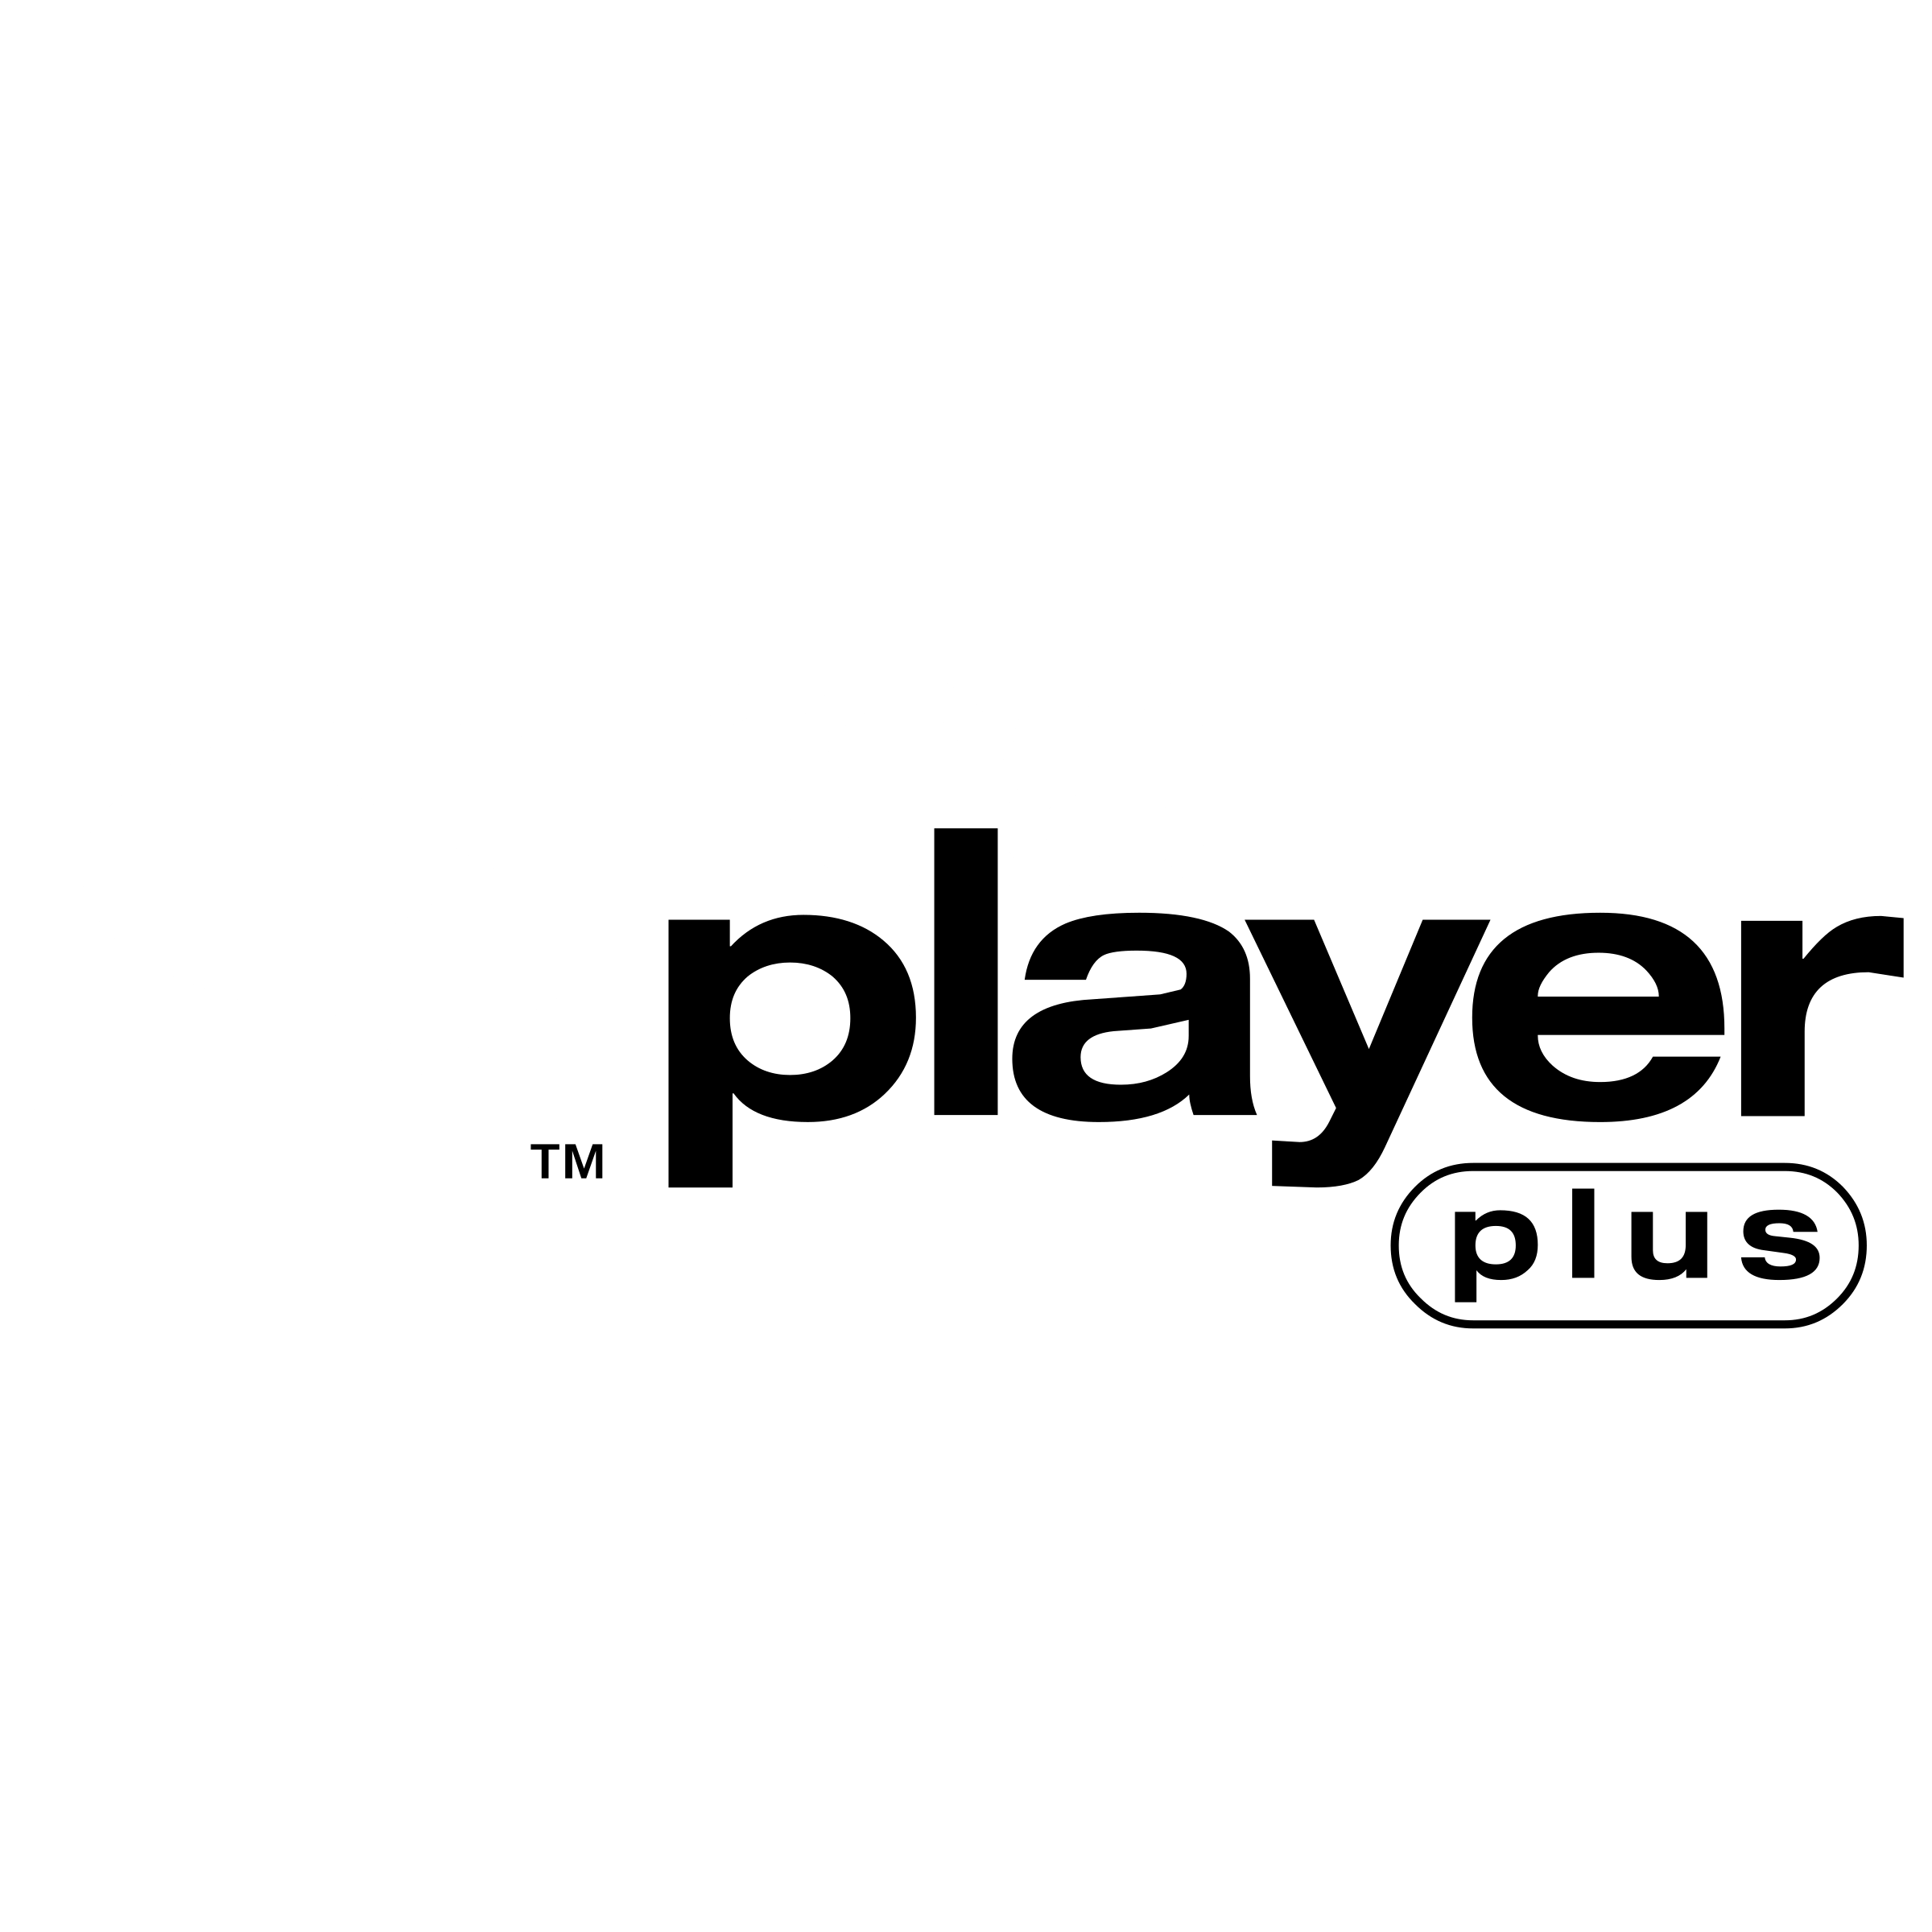 RealPlayer Logo - RealPlayer 8 Plus Logo PNG Transparent & SVG Vector - Freebie Supply